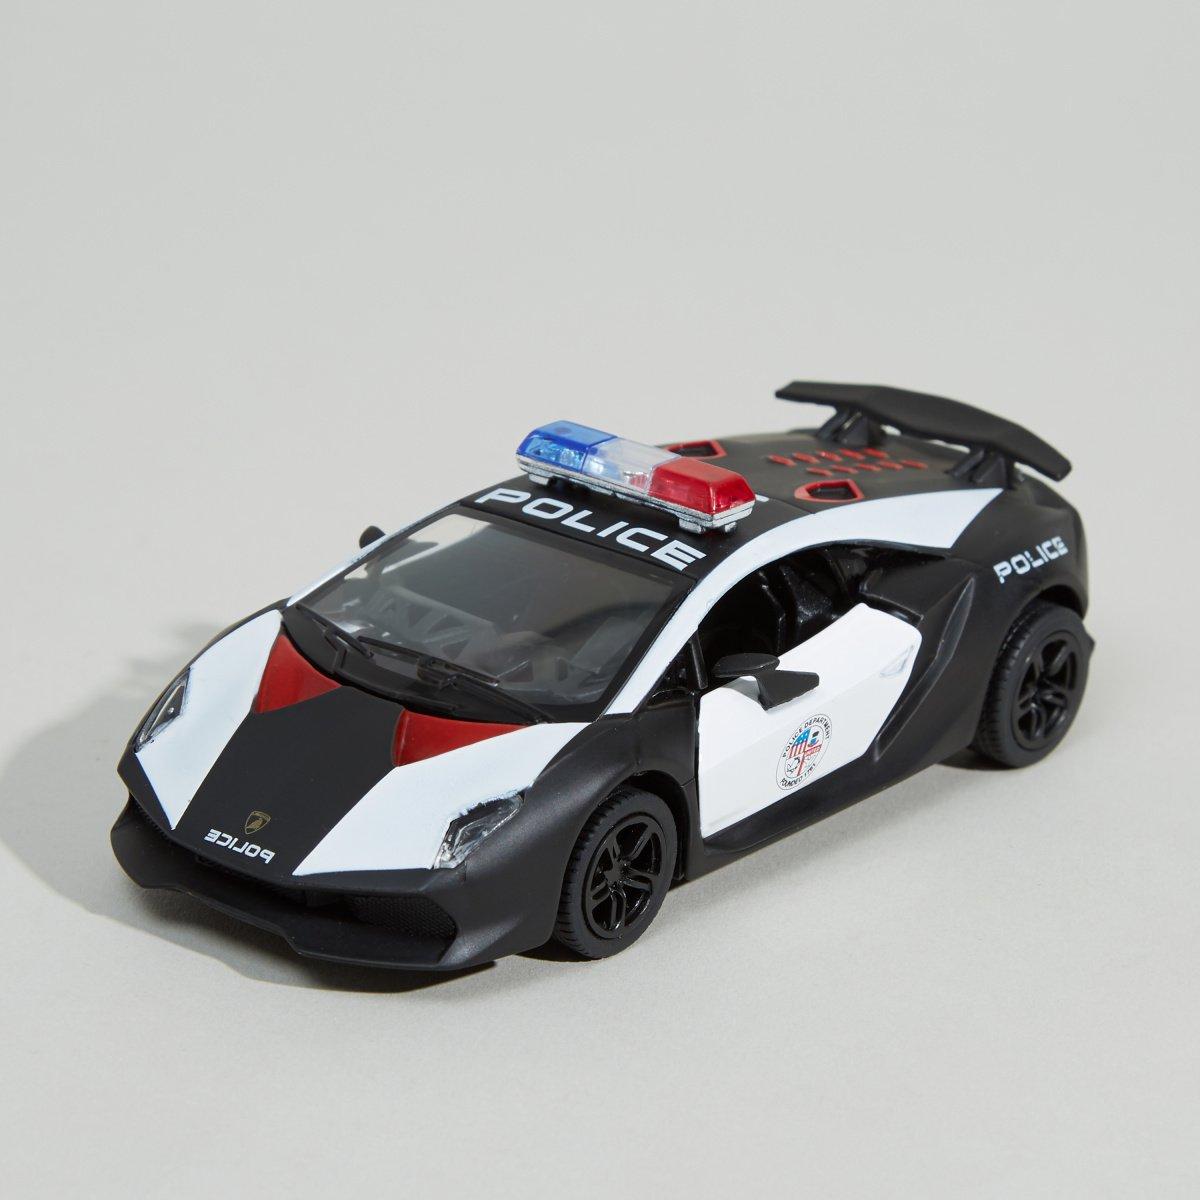 KiNSMART Lamborghini Sesto Elemento Police Toy Car